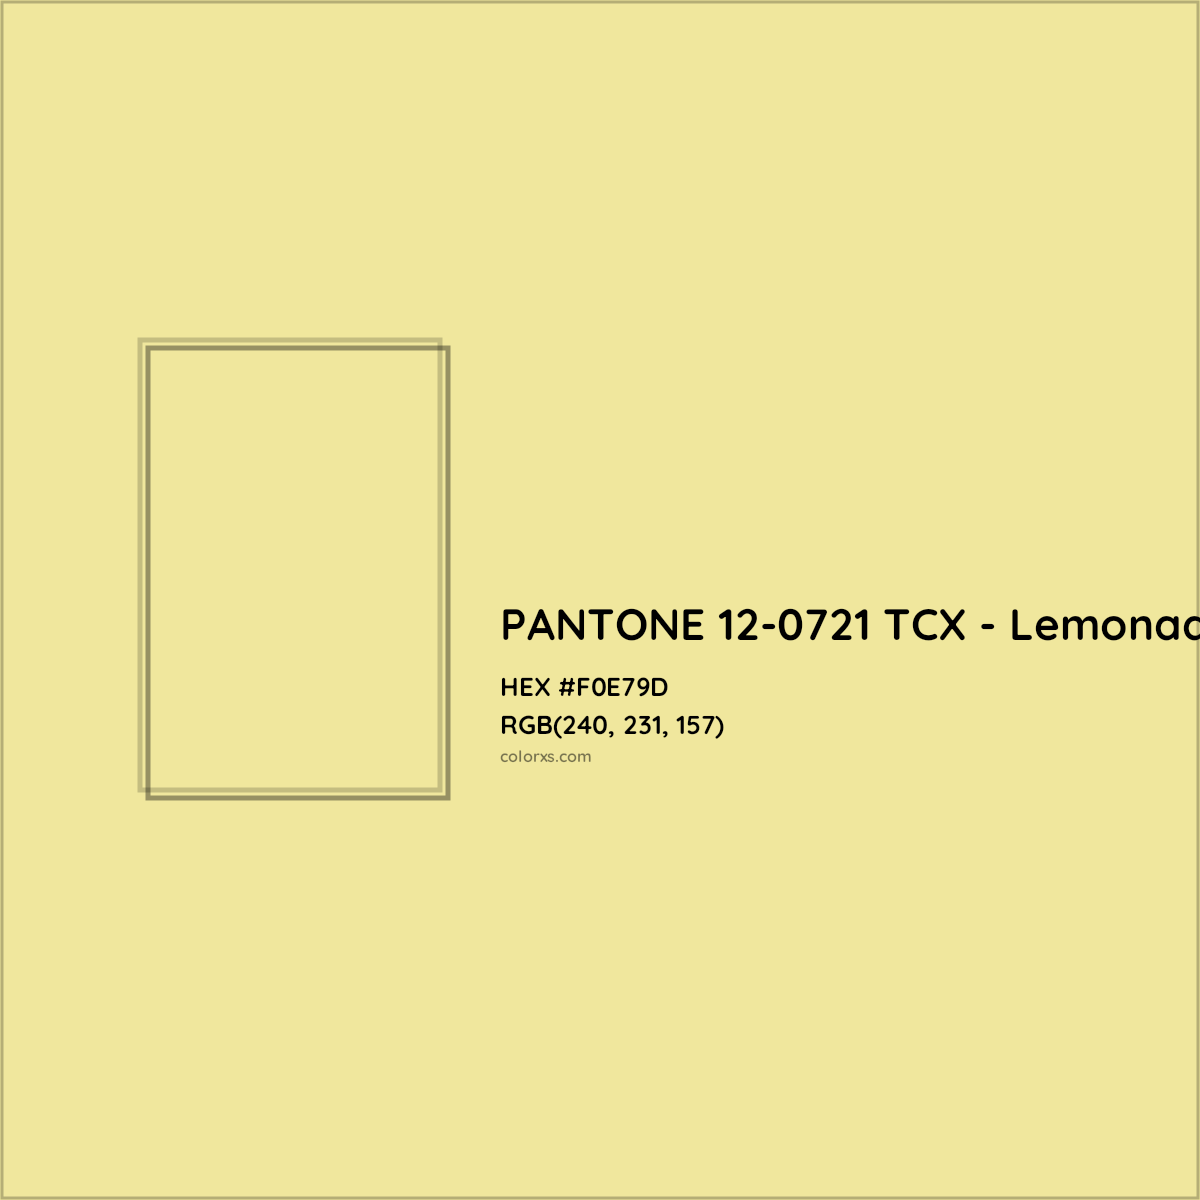 HEX #F0E79D PANTONE 12-0721 TCX - Lemonade CMS Pantone TCX - Color Code